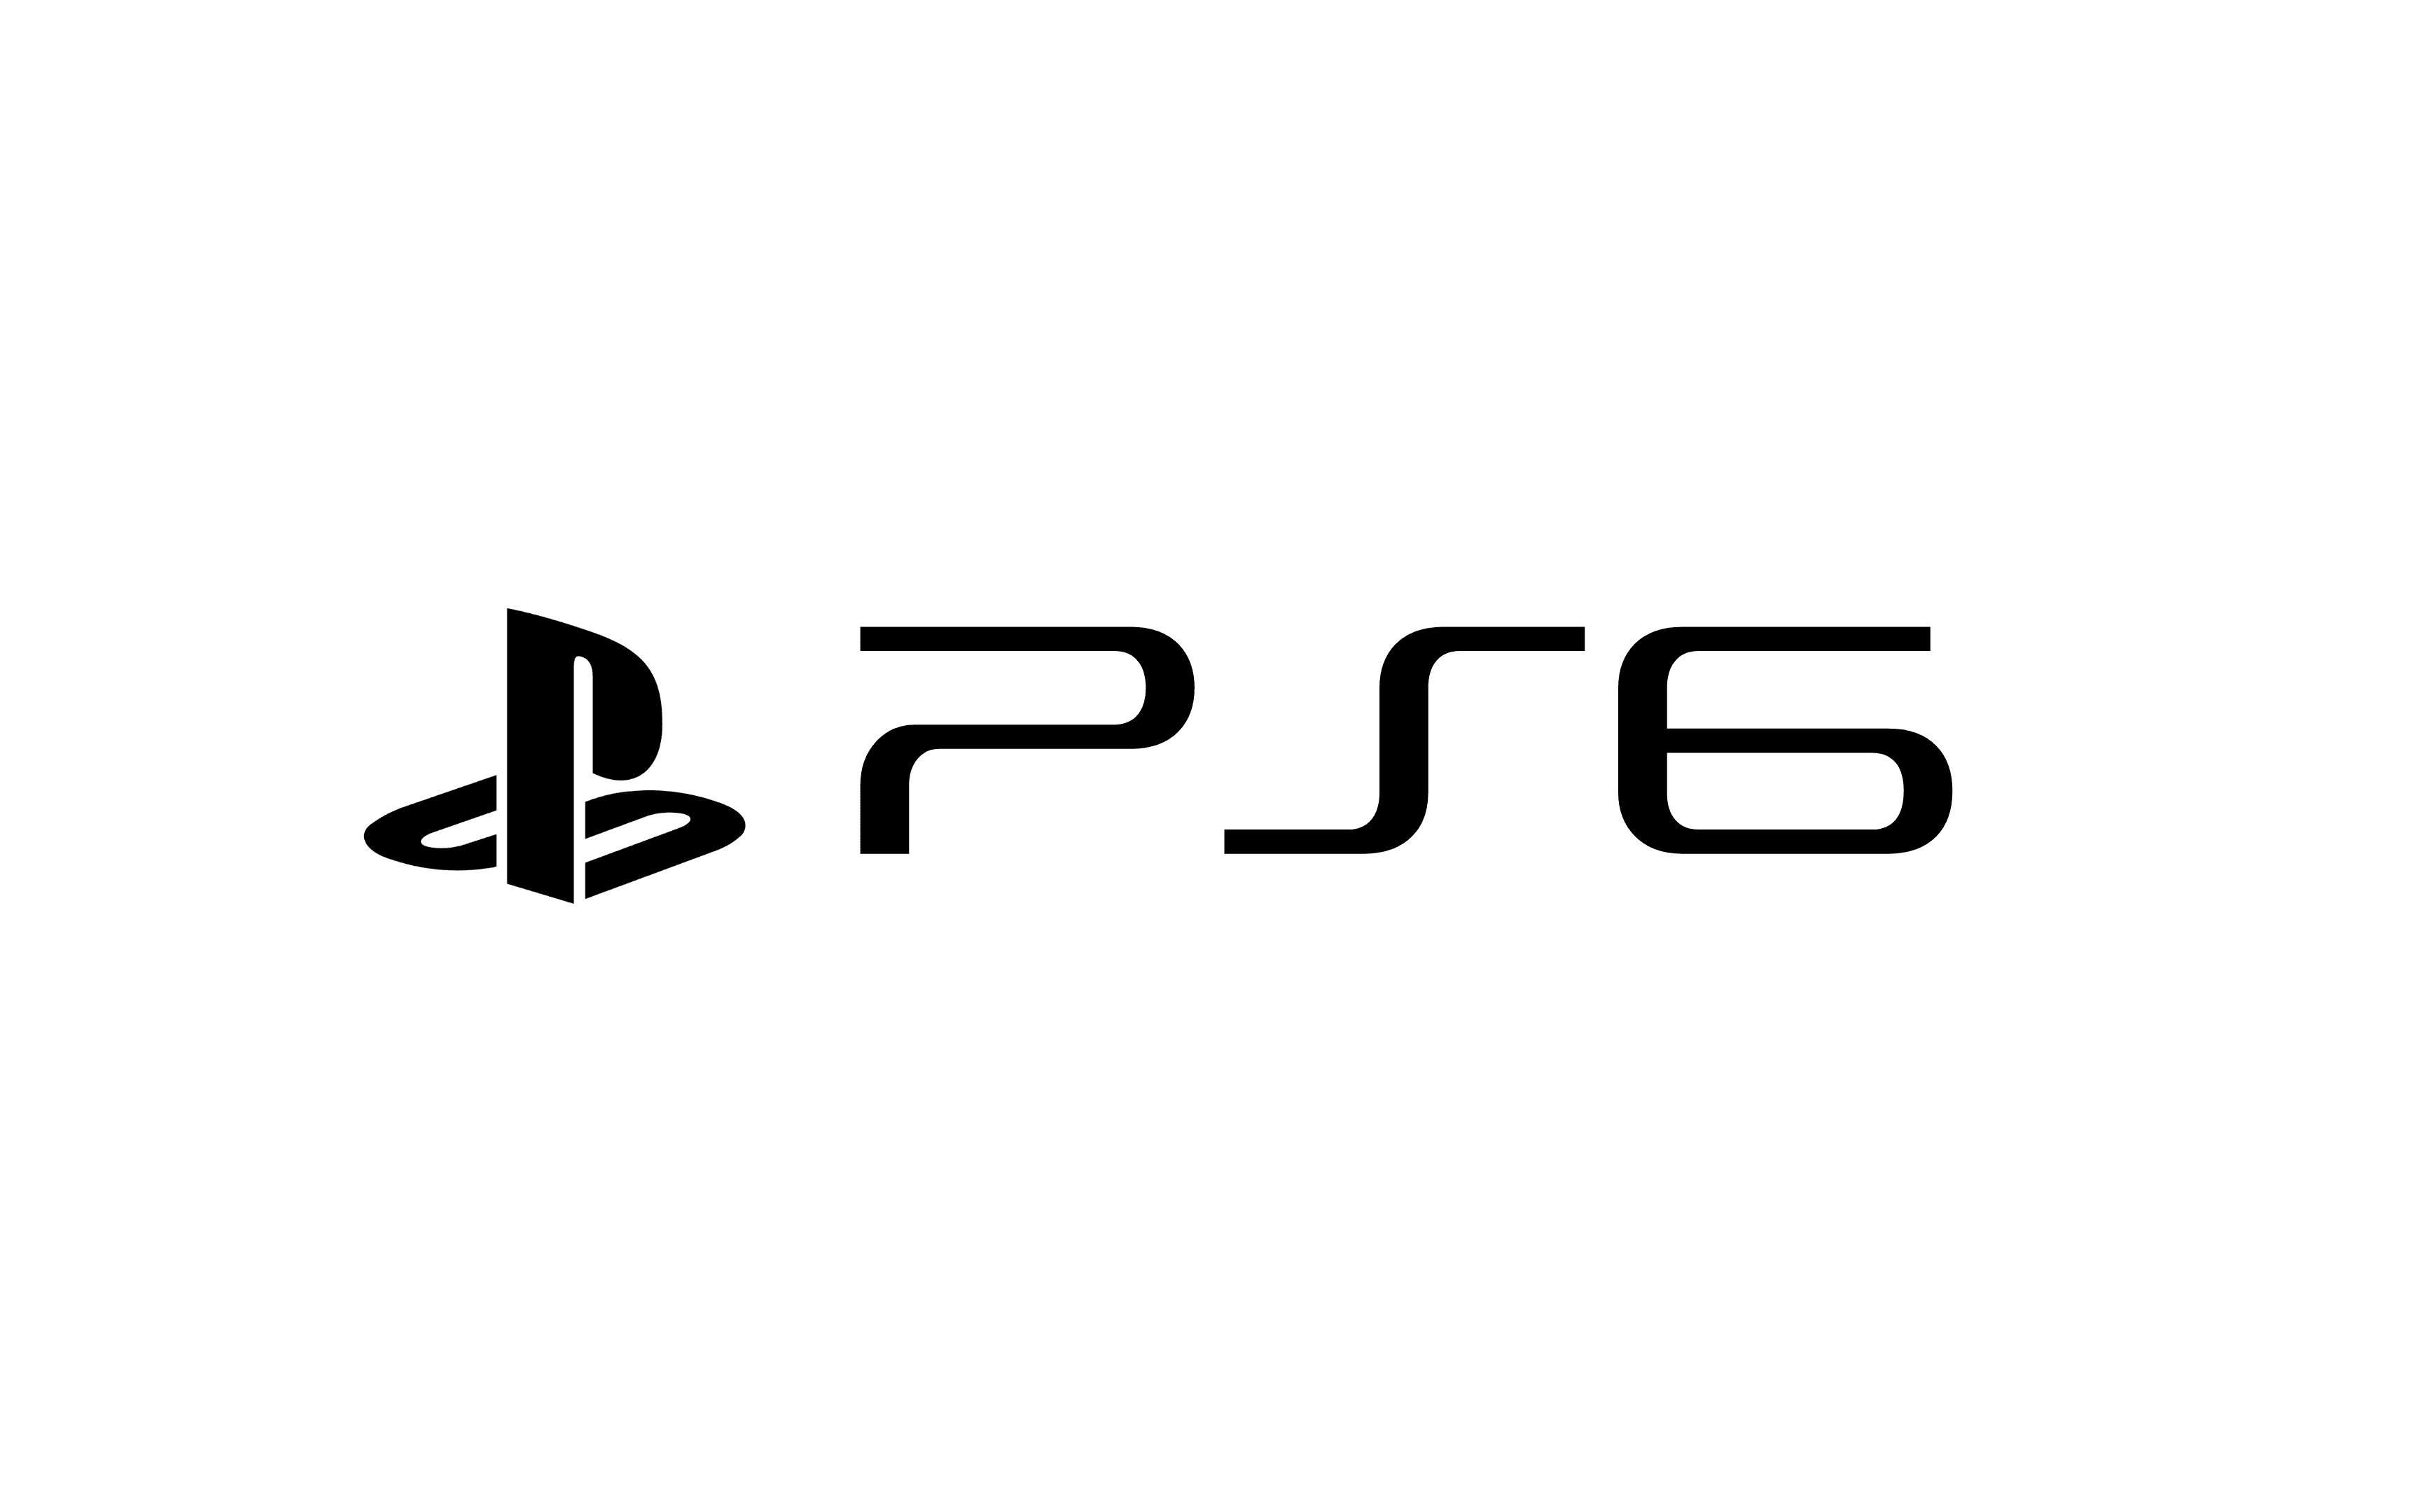 PS6 logo